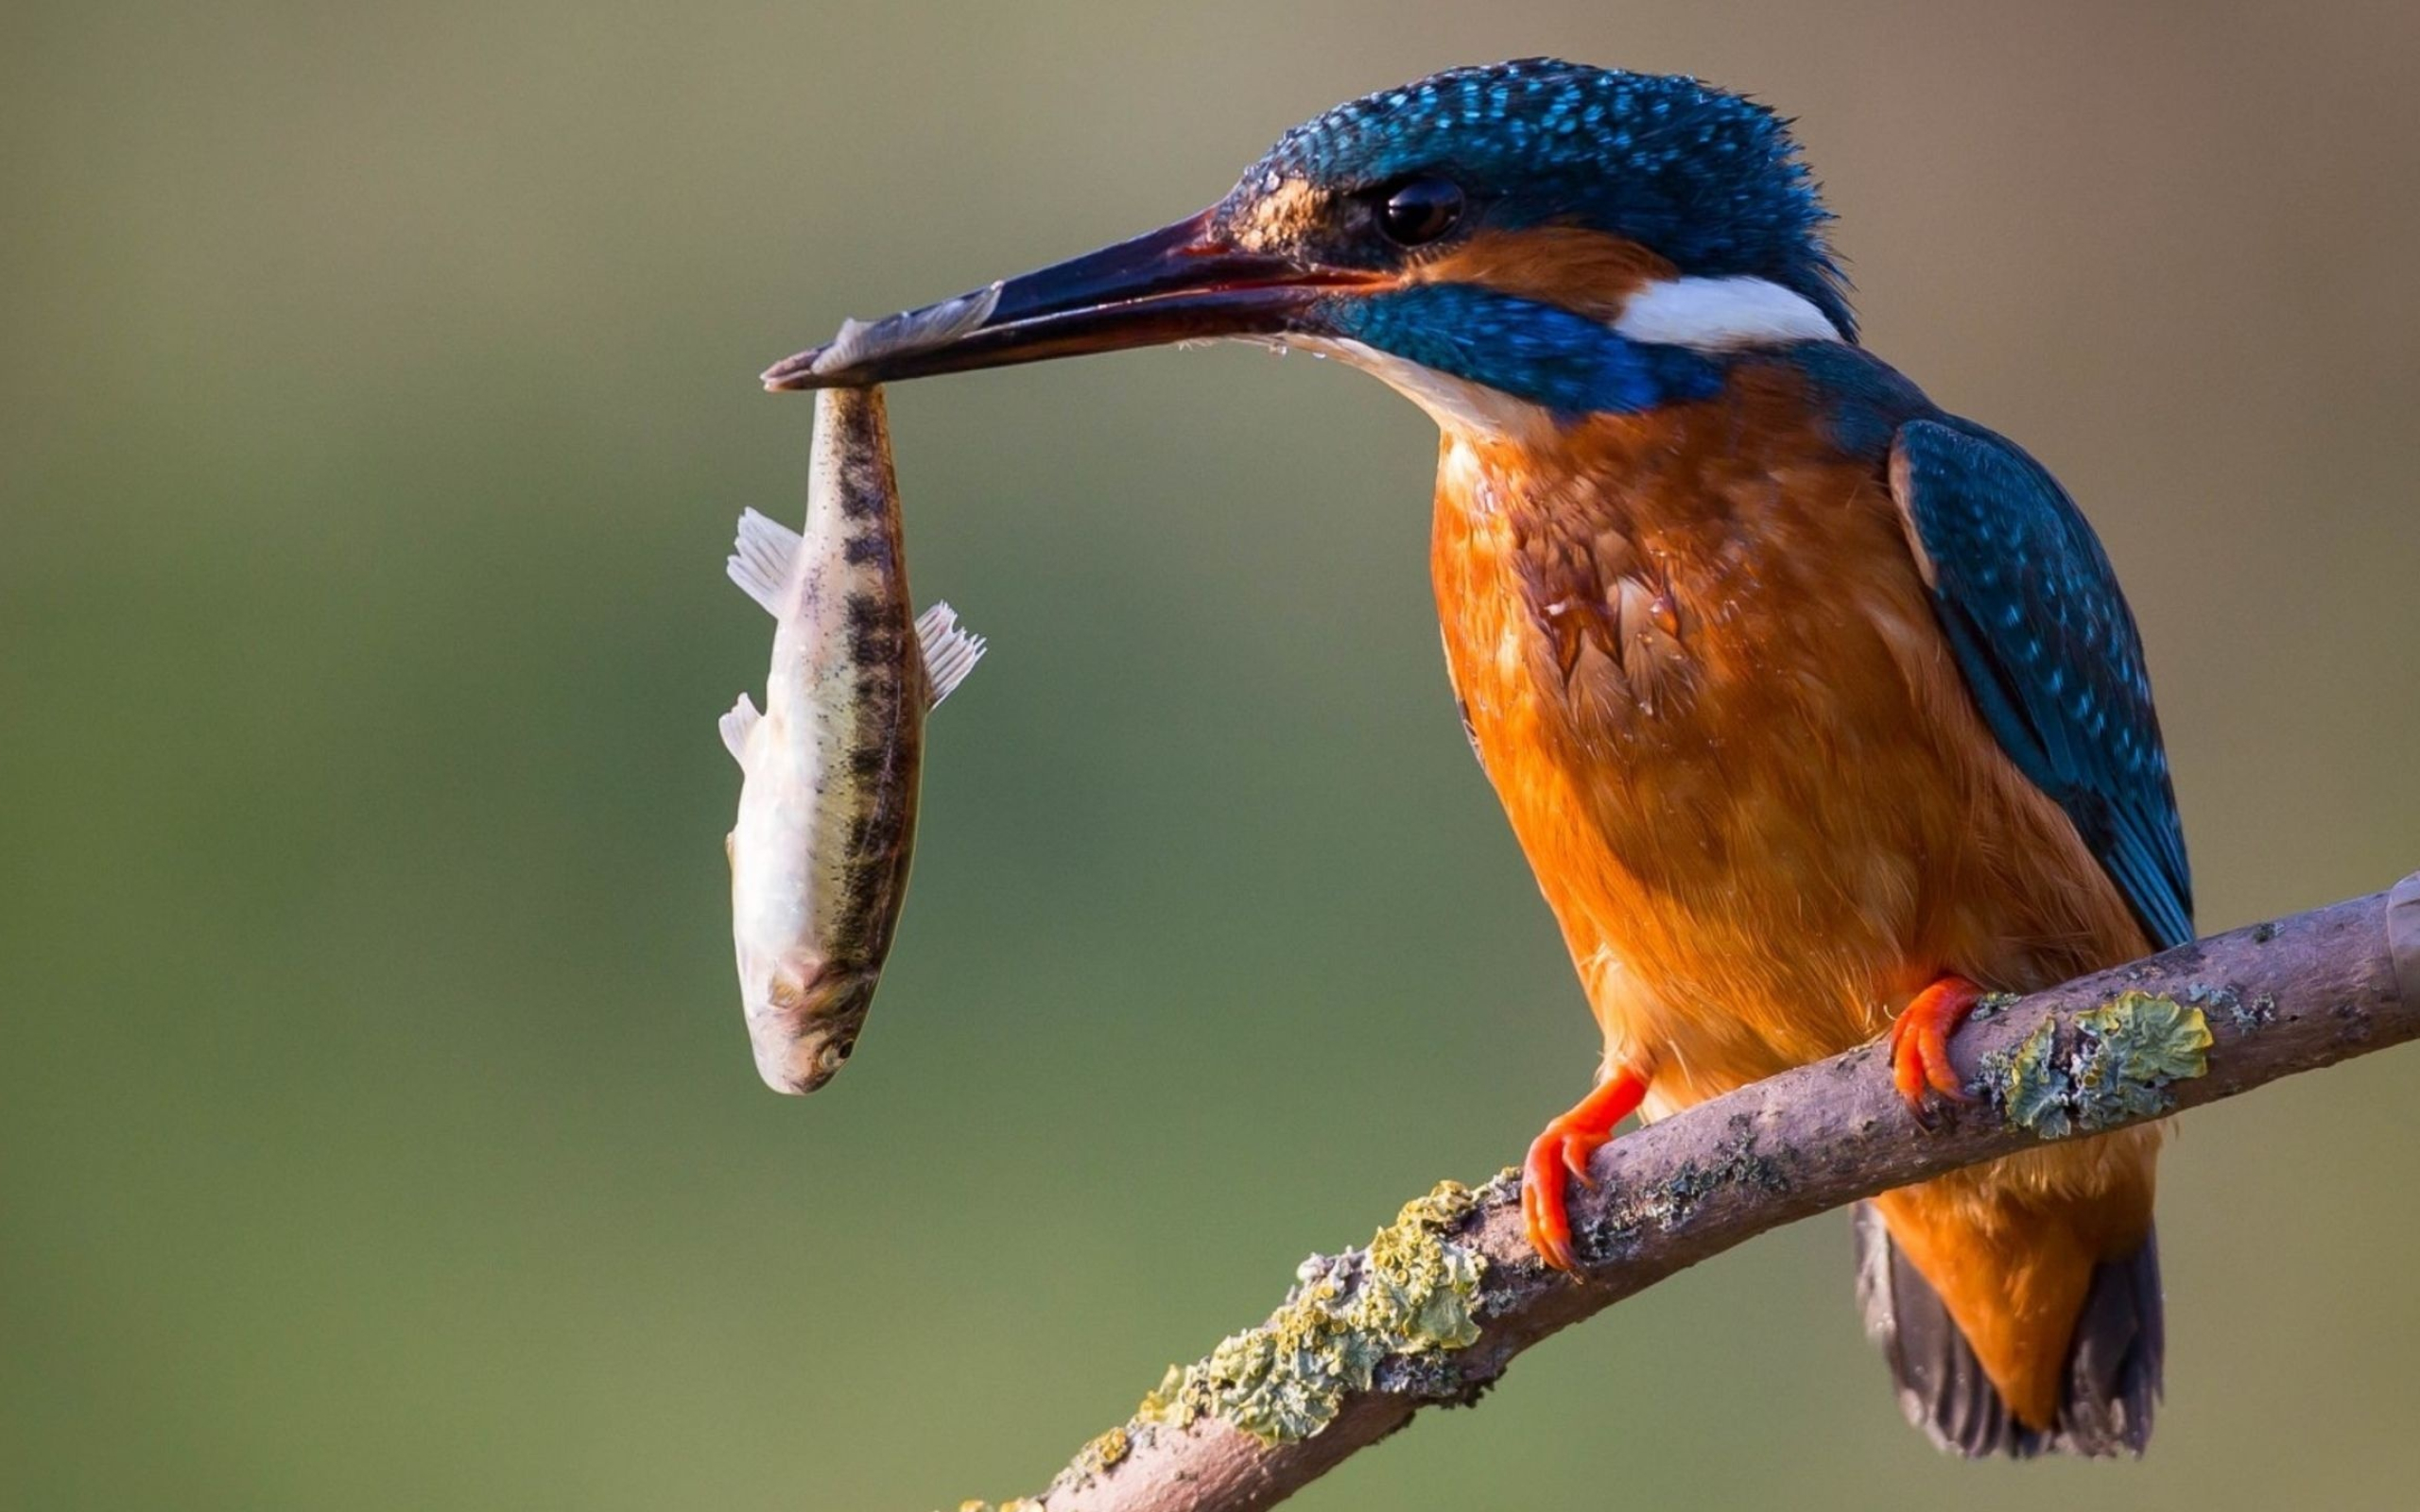 Kingfisher, Striking wallpaper, Stunning bird photography, Wallpaper download, 2560x1600 HD Desktop